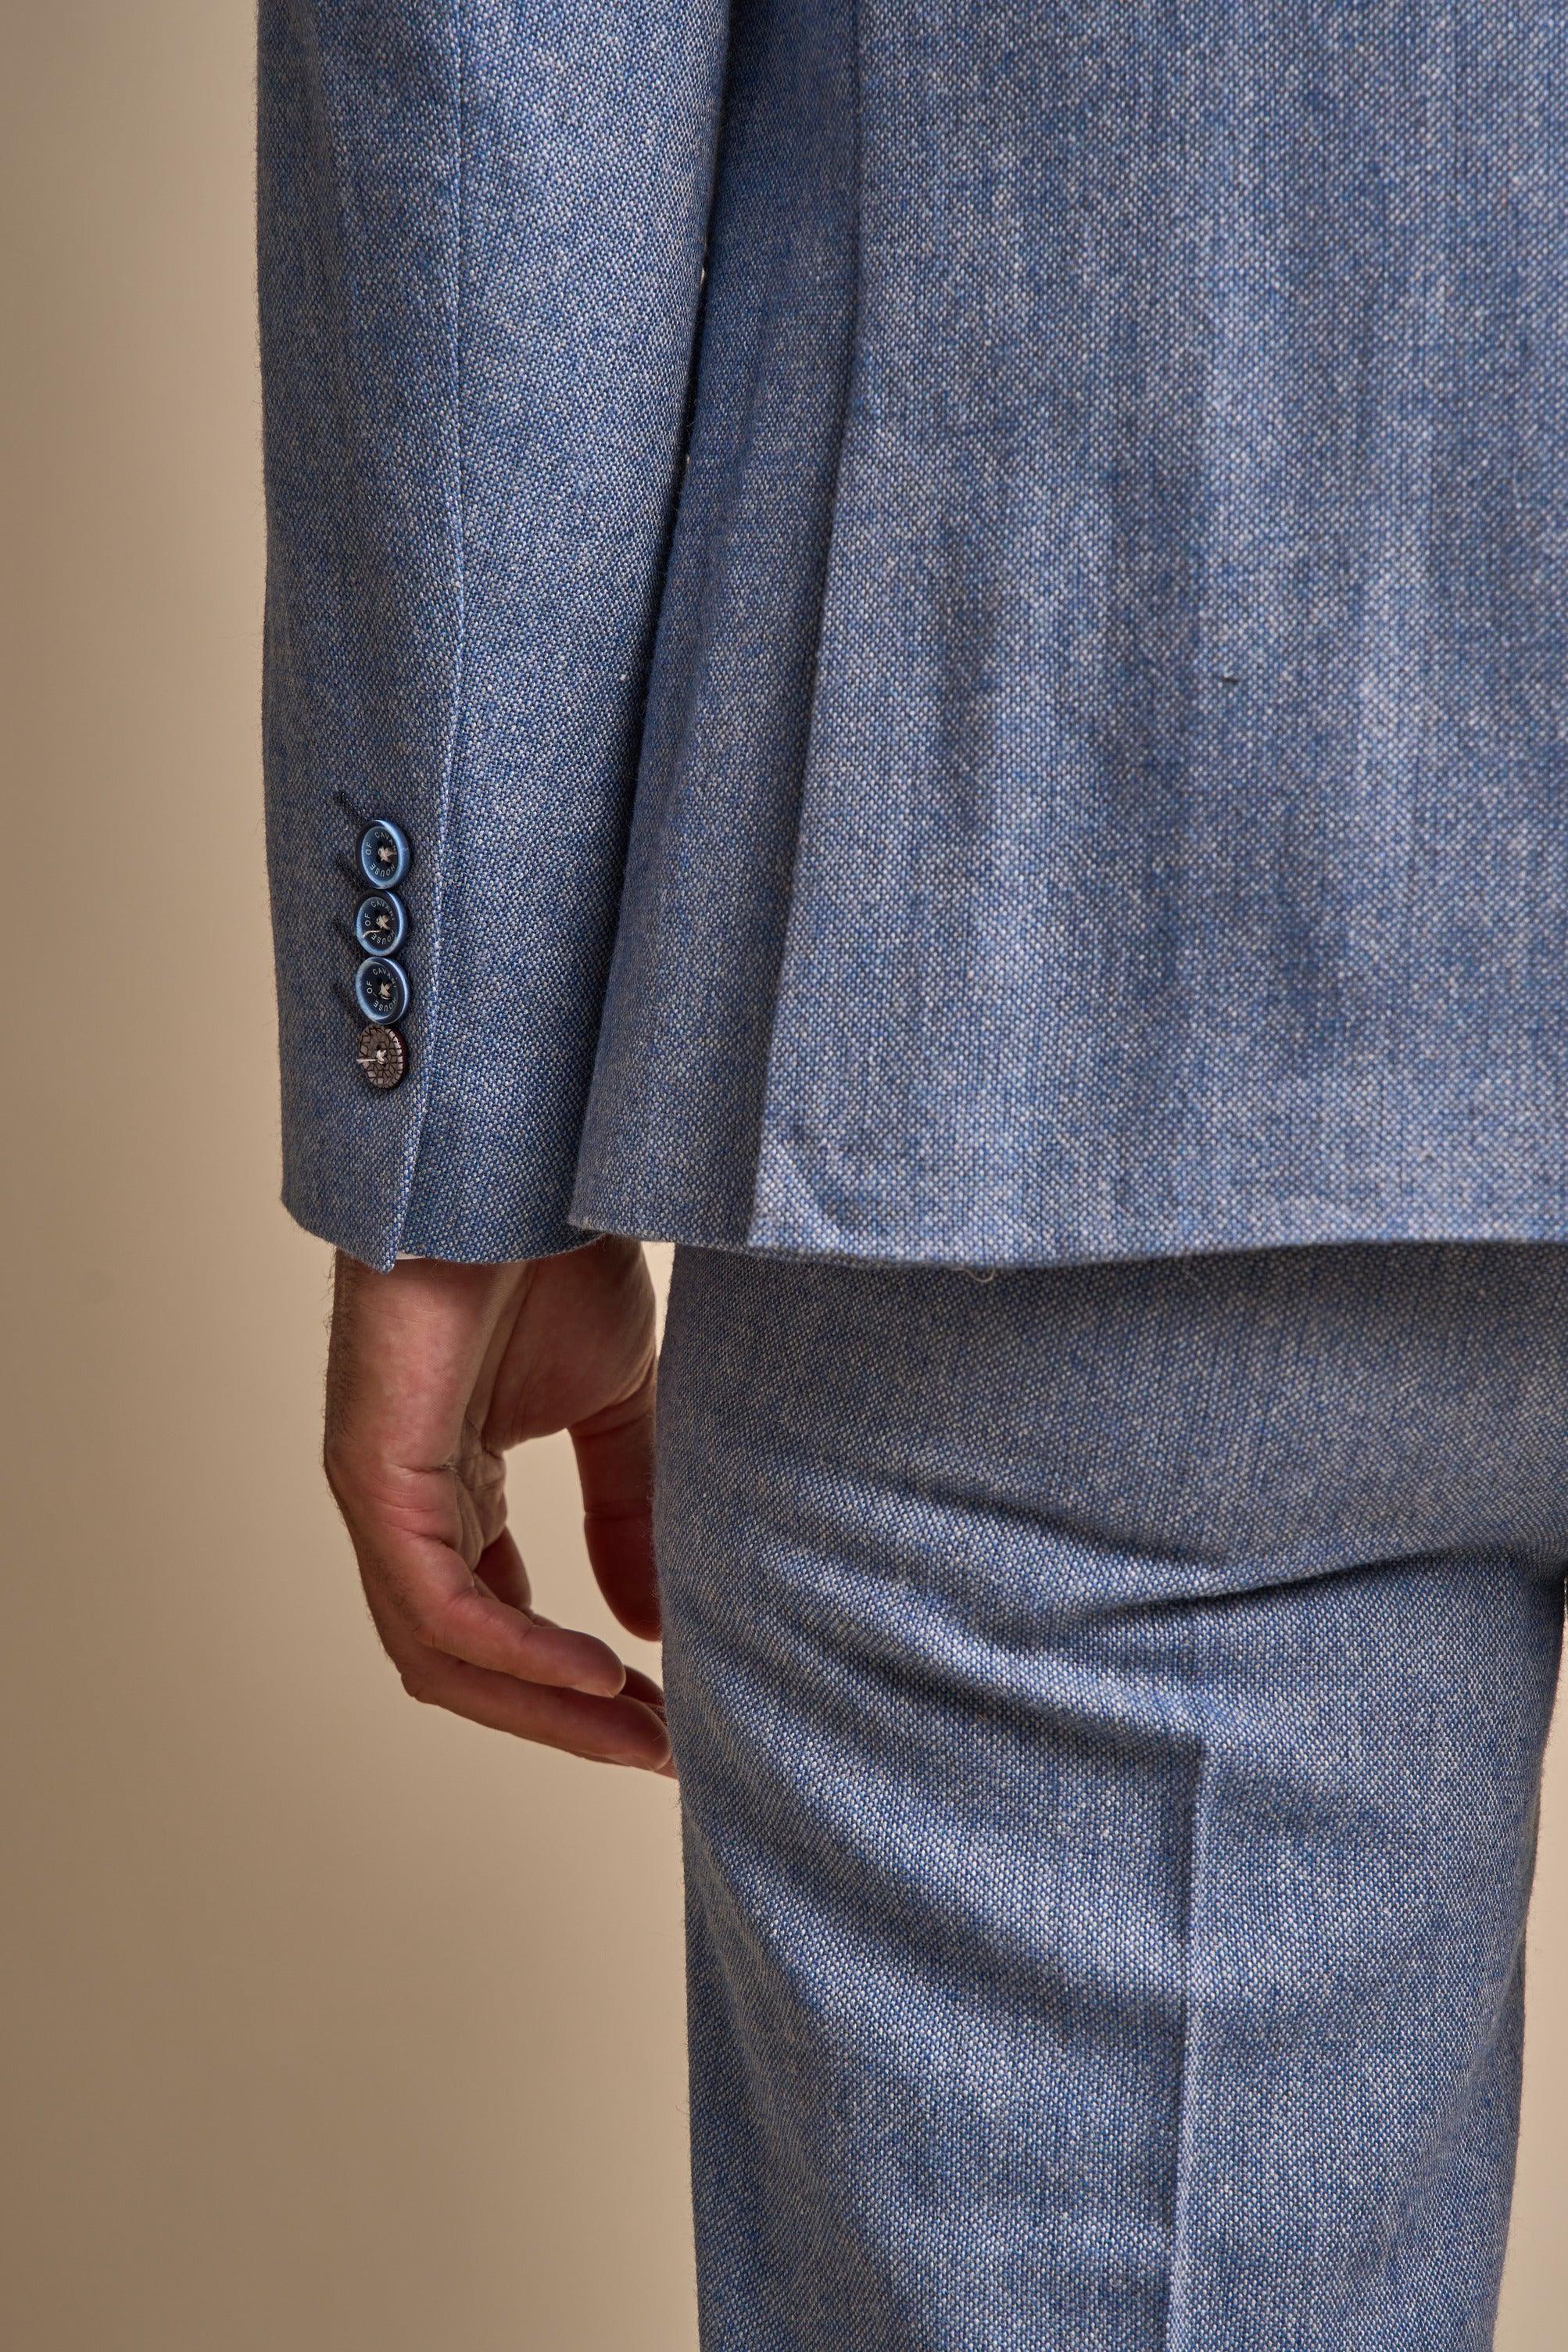 Wells Blue Tweed three piece suit back detail